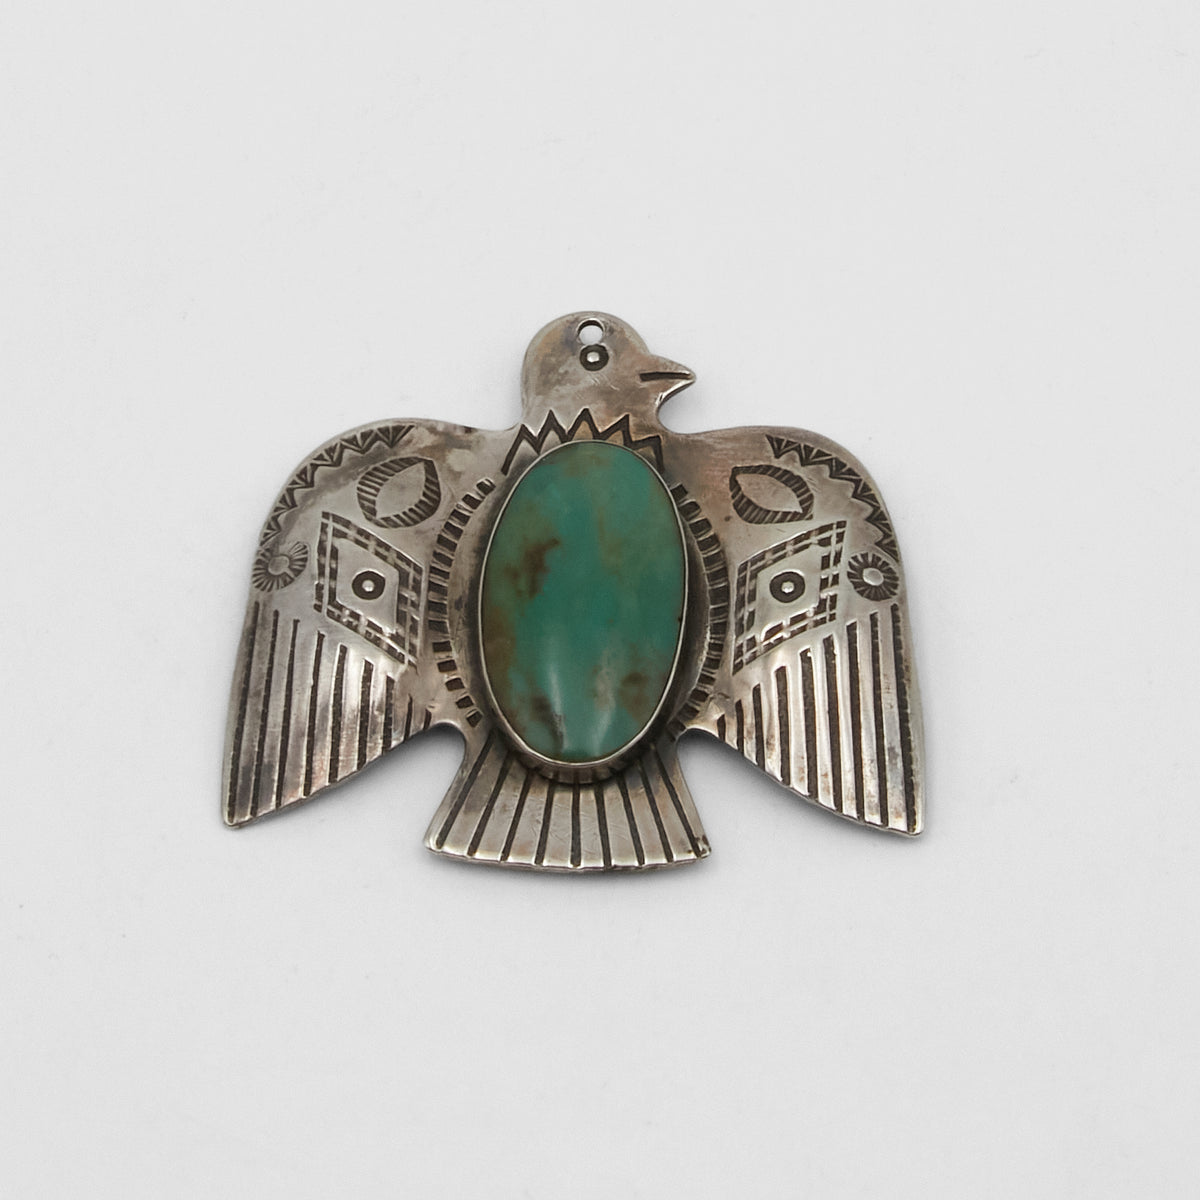 Vintage Jewelry Thunderbird Brooch